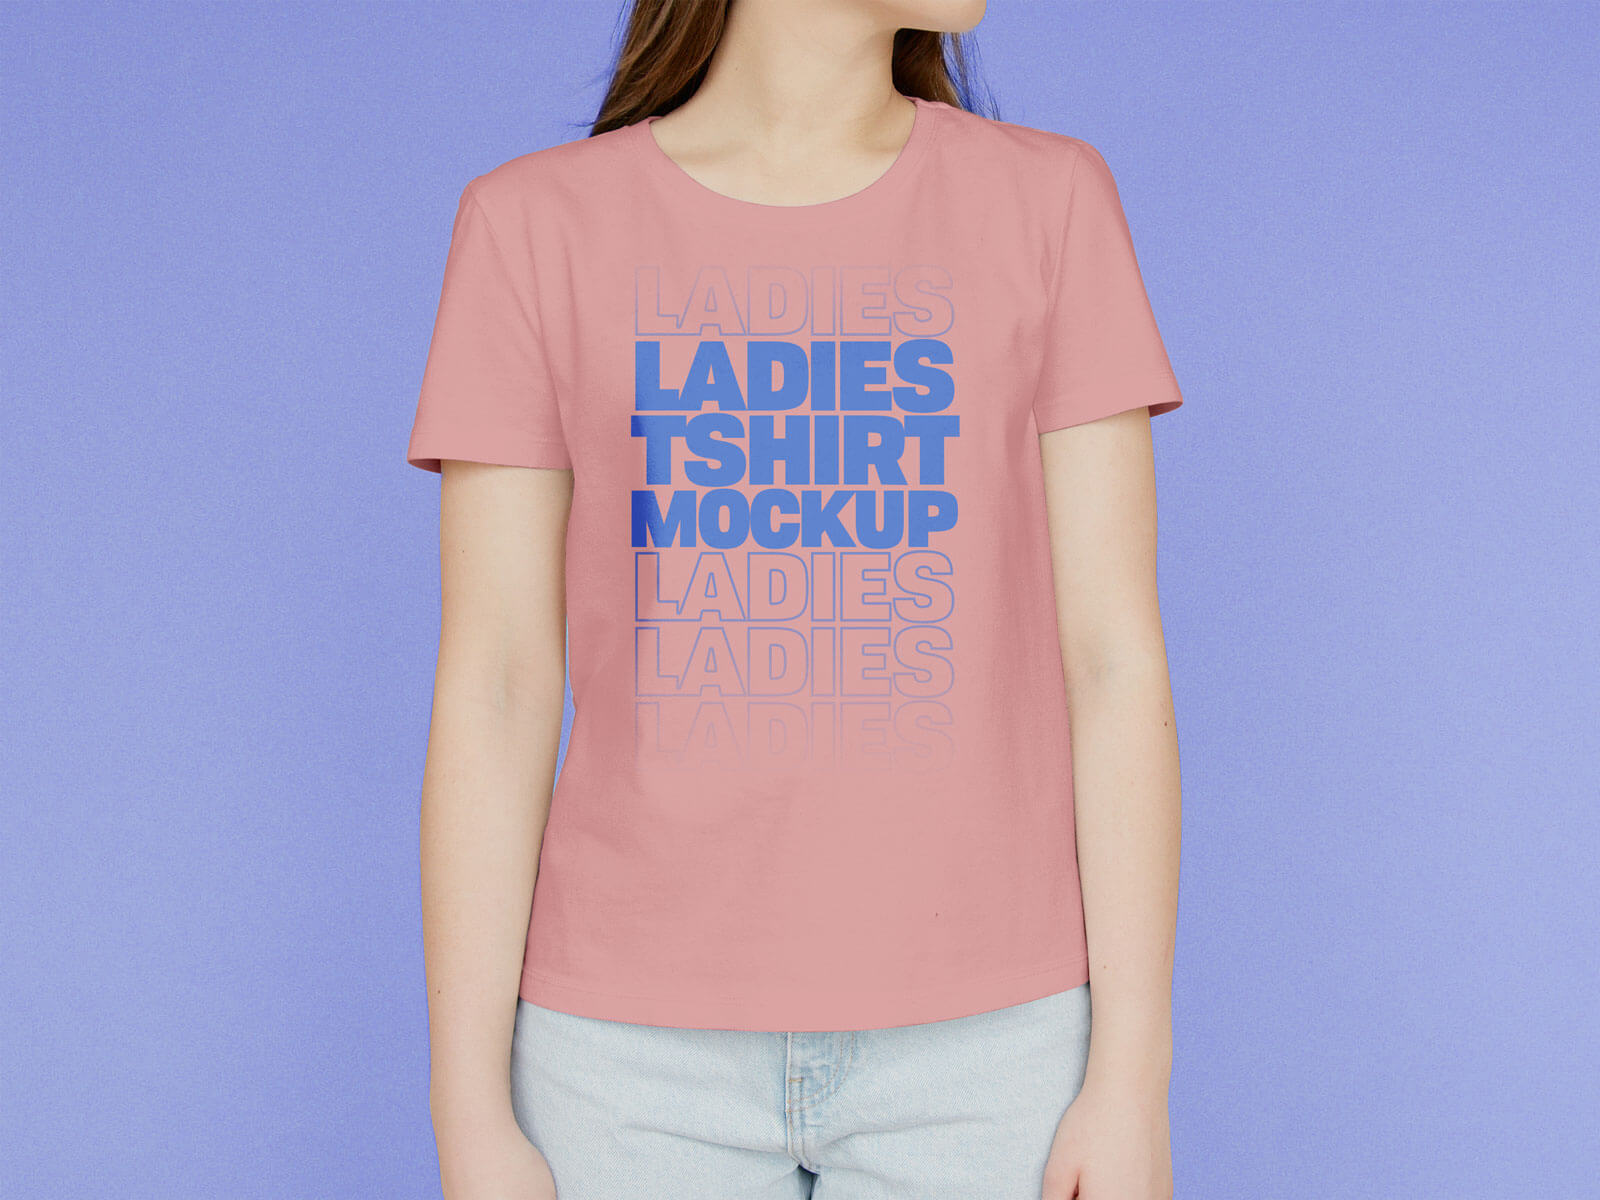 Free-Ladies-T-Shirt-Mockup-PSD-2